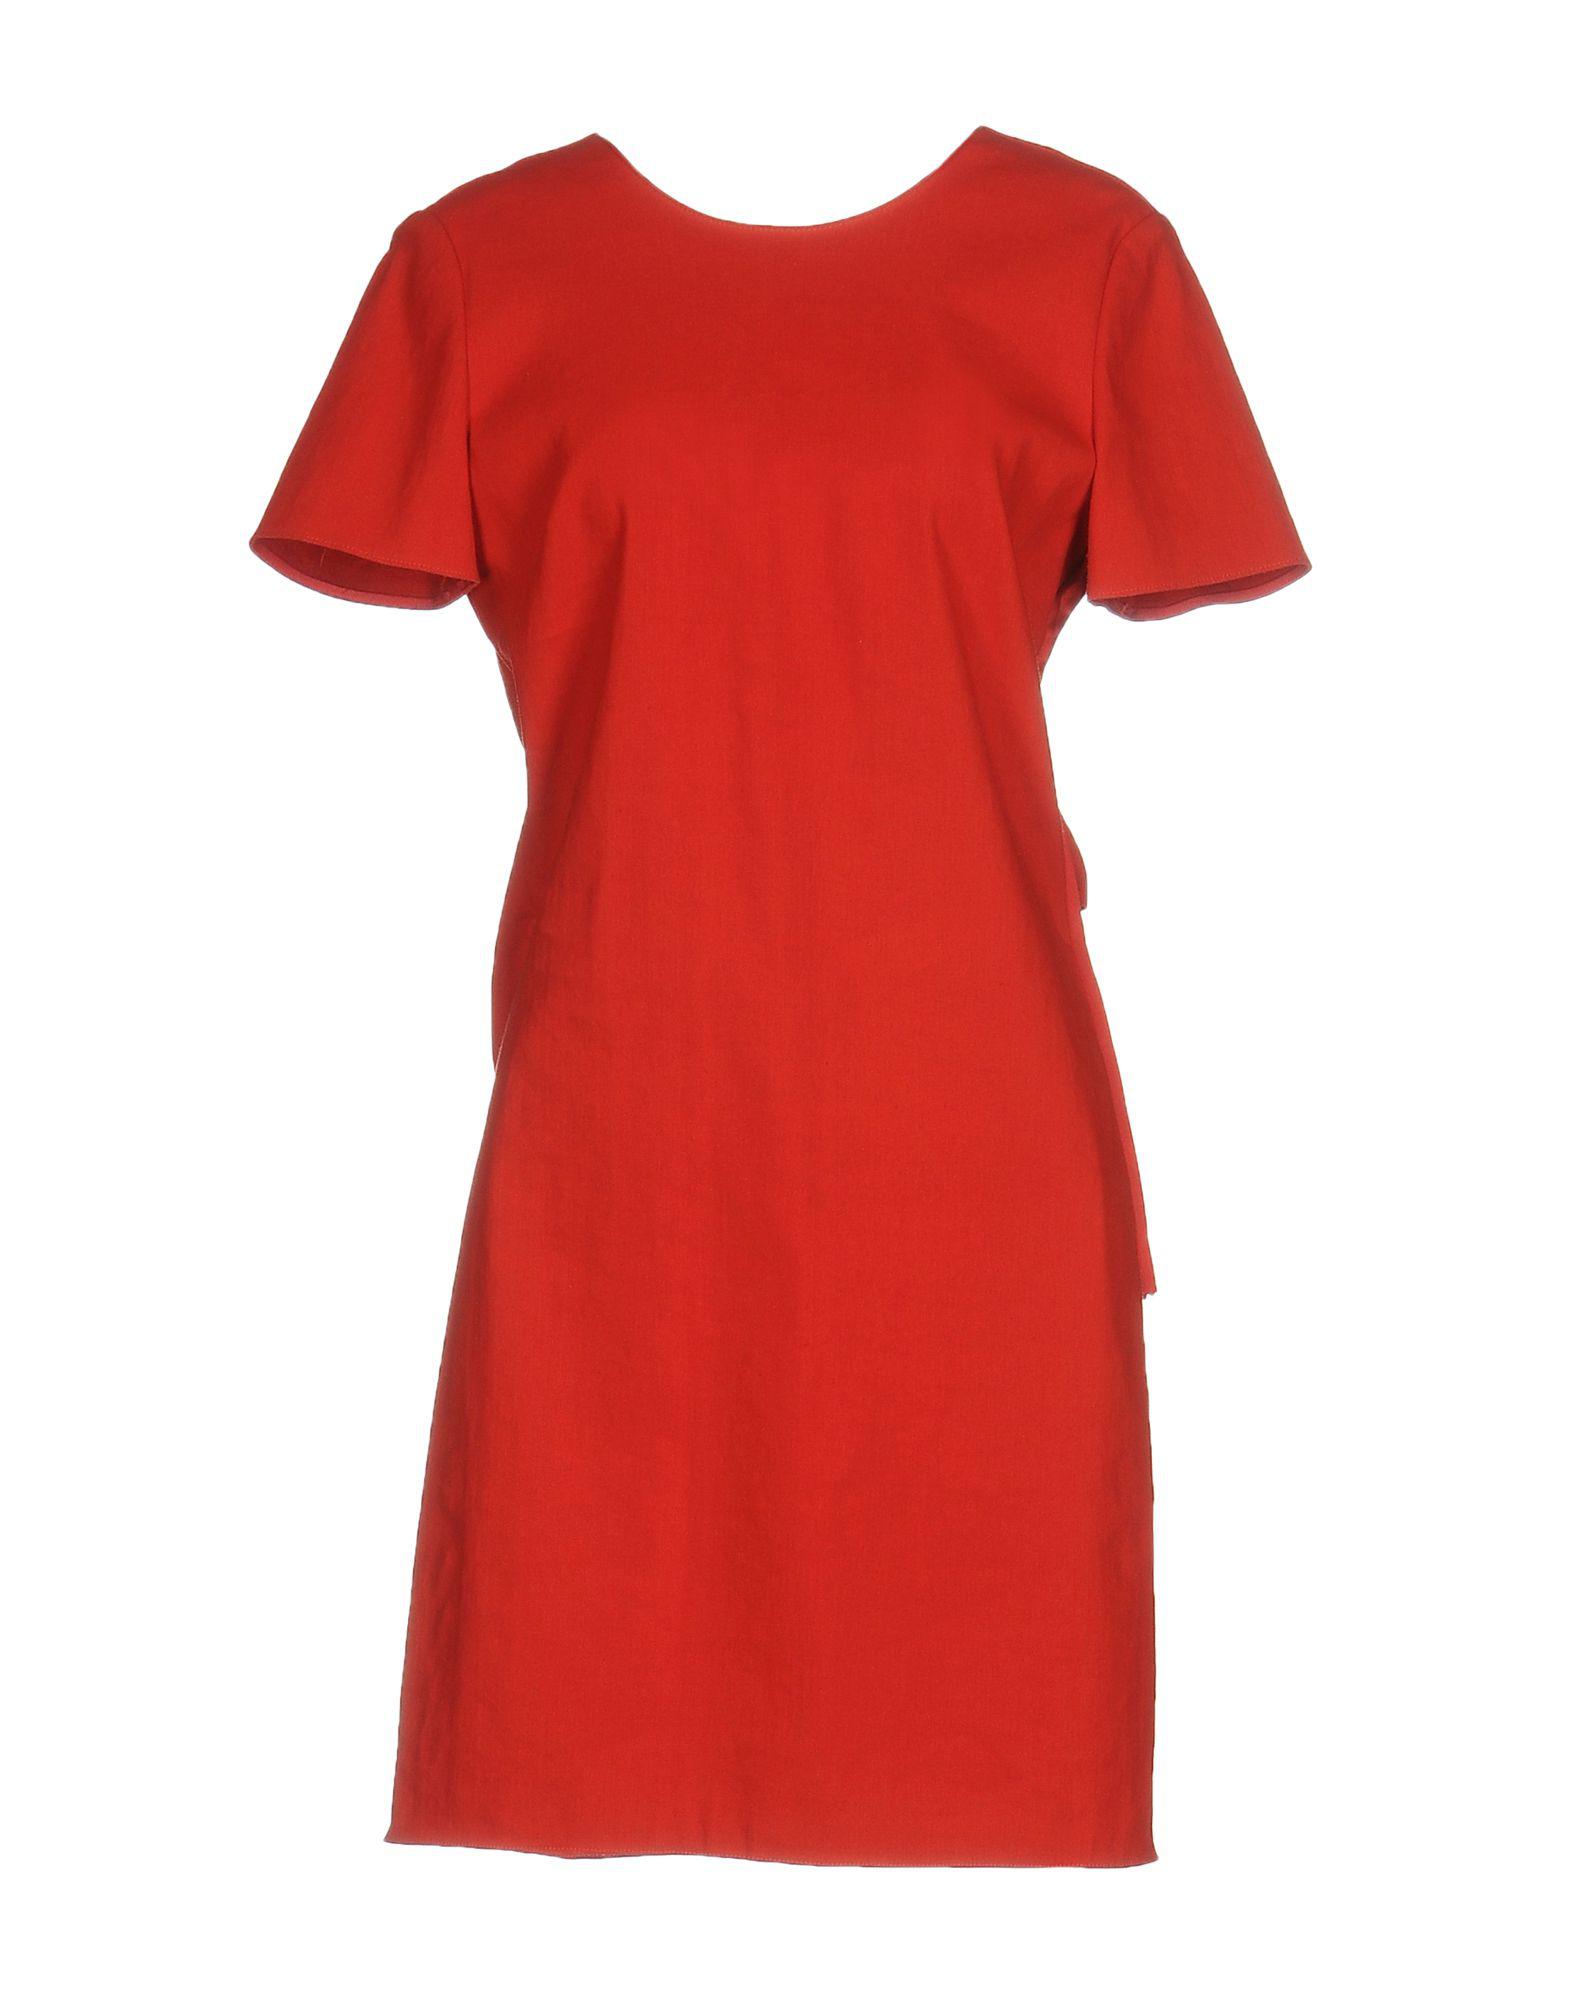 Lanvin Linen Short Dress in Red - Lyst